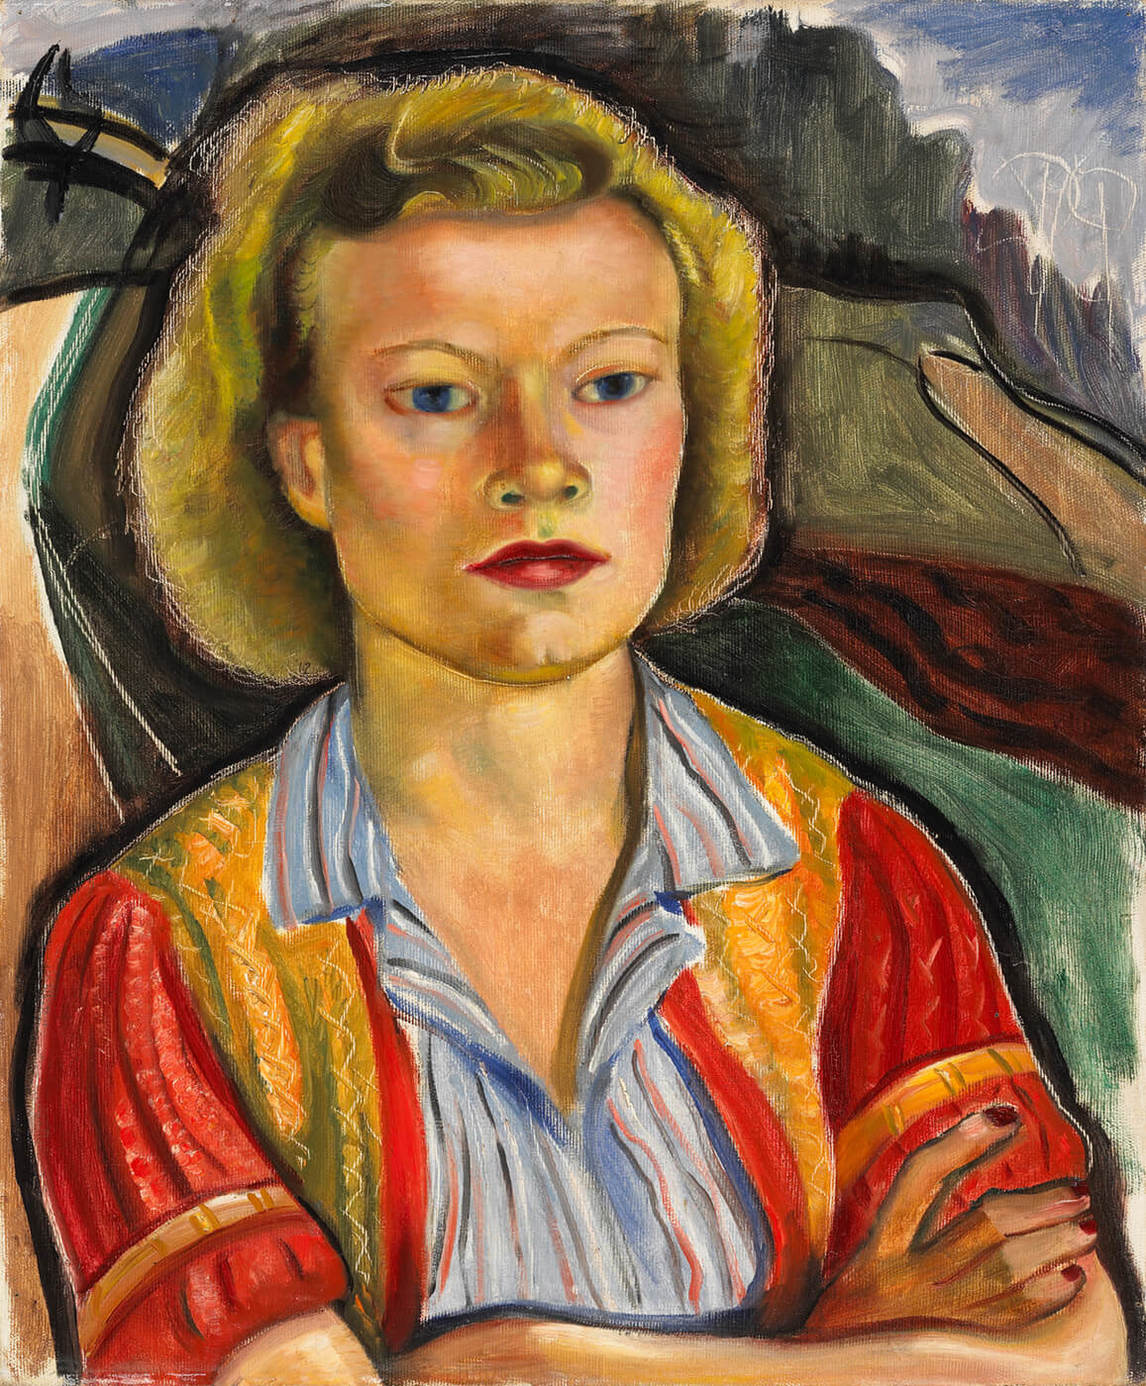 Art Canada Institute, Prudence Heward, Farmer’s Daughter, 1945